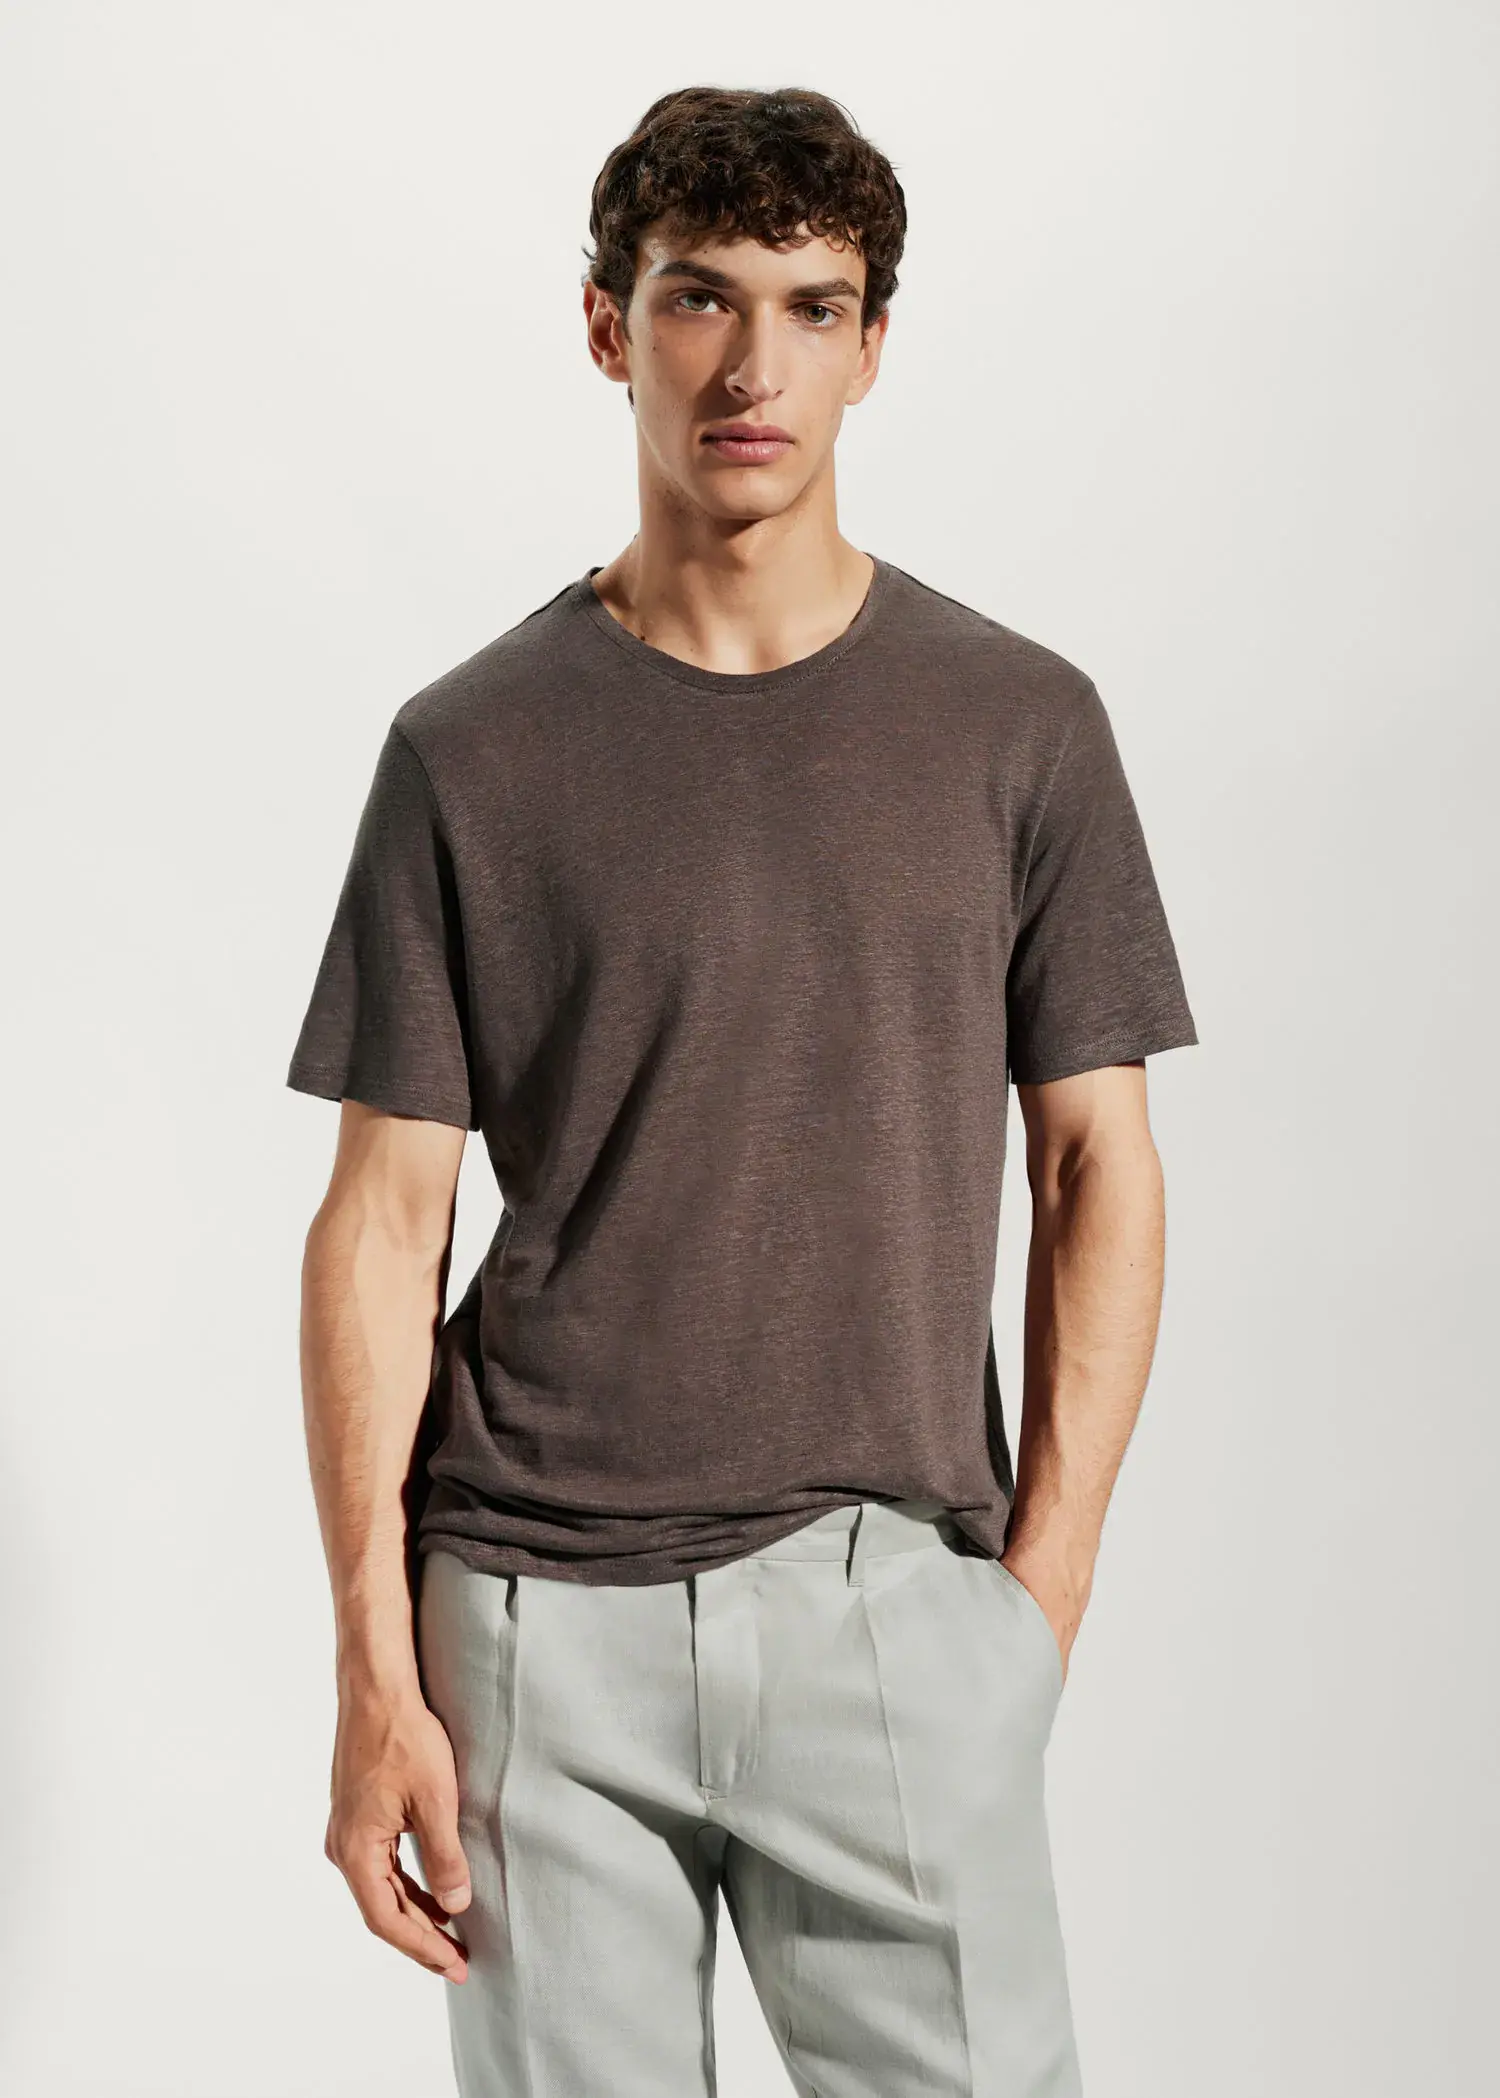 Mango 100% linen slim-fit t-shirt. a man wearing a brown t-shirt and gray pants. 